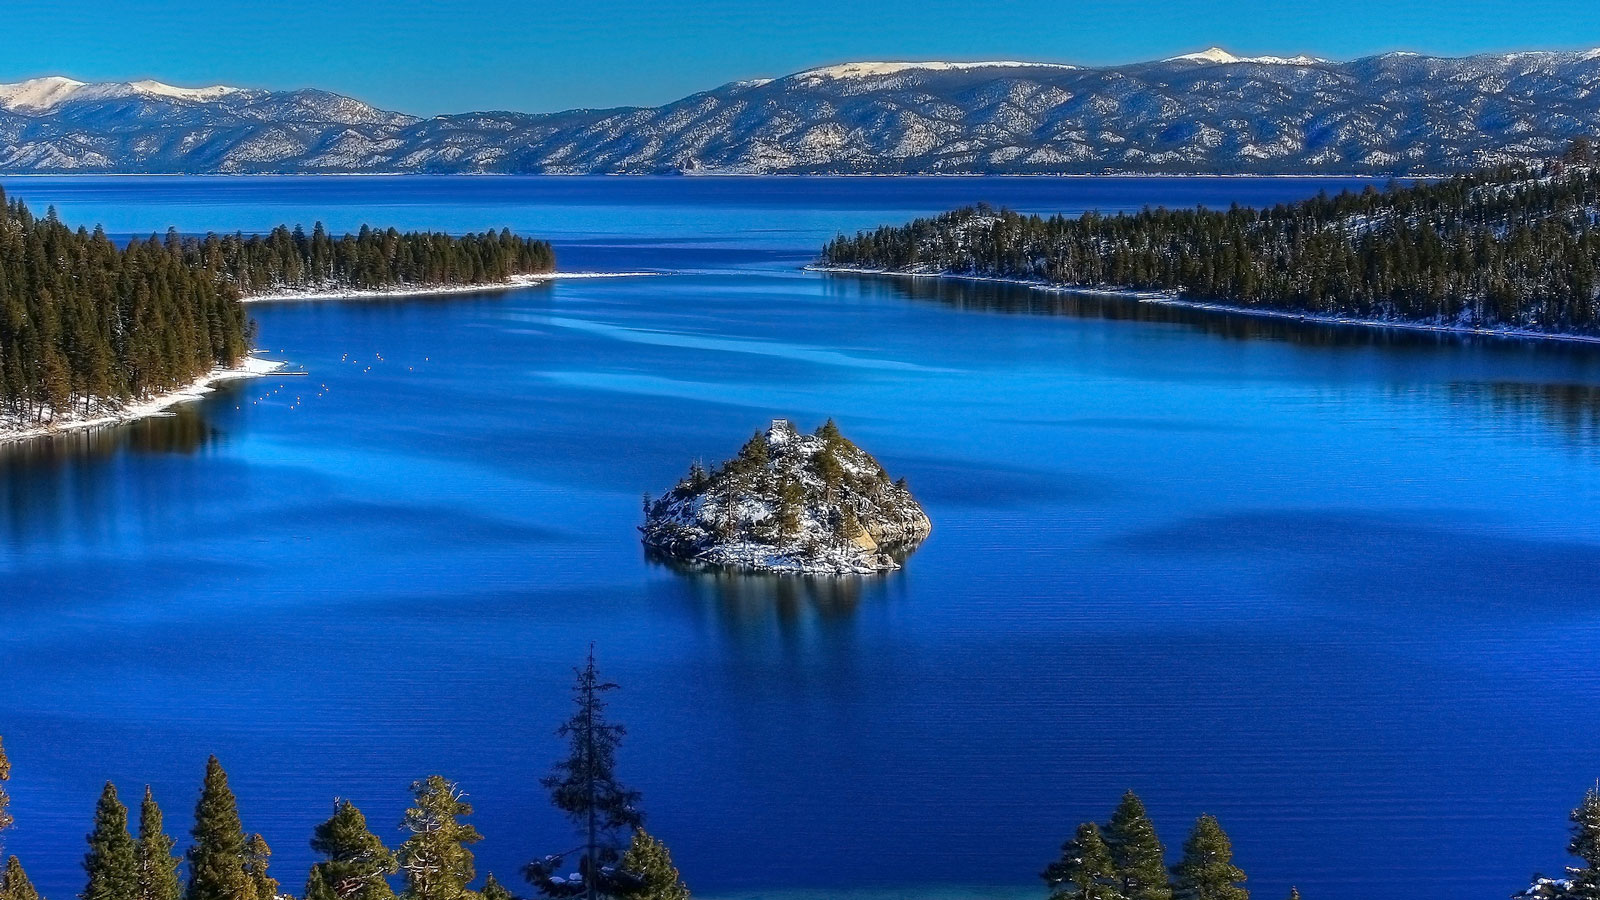 Stock image of Emerald Bay, Lake Tahoe, CA.